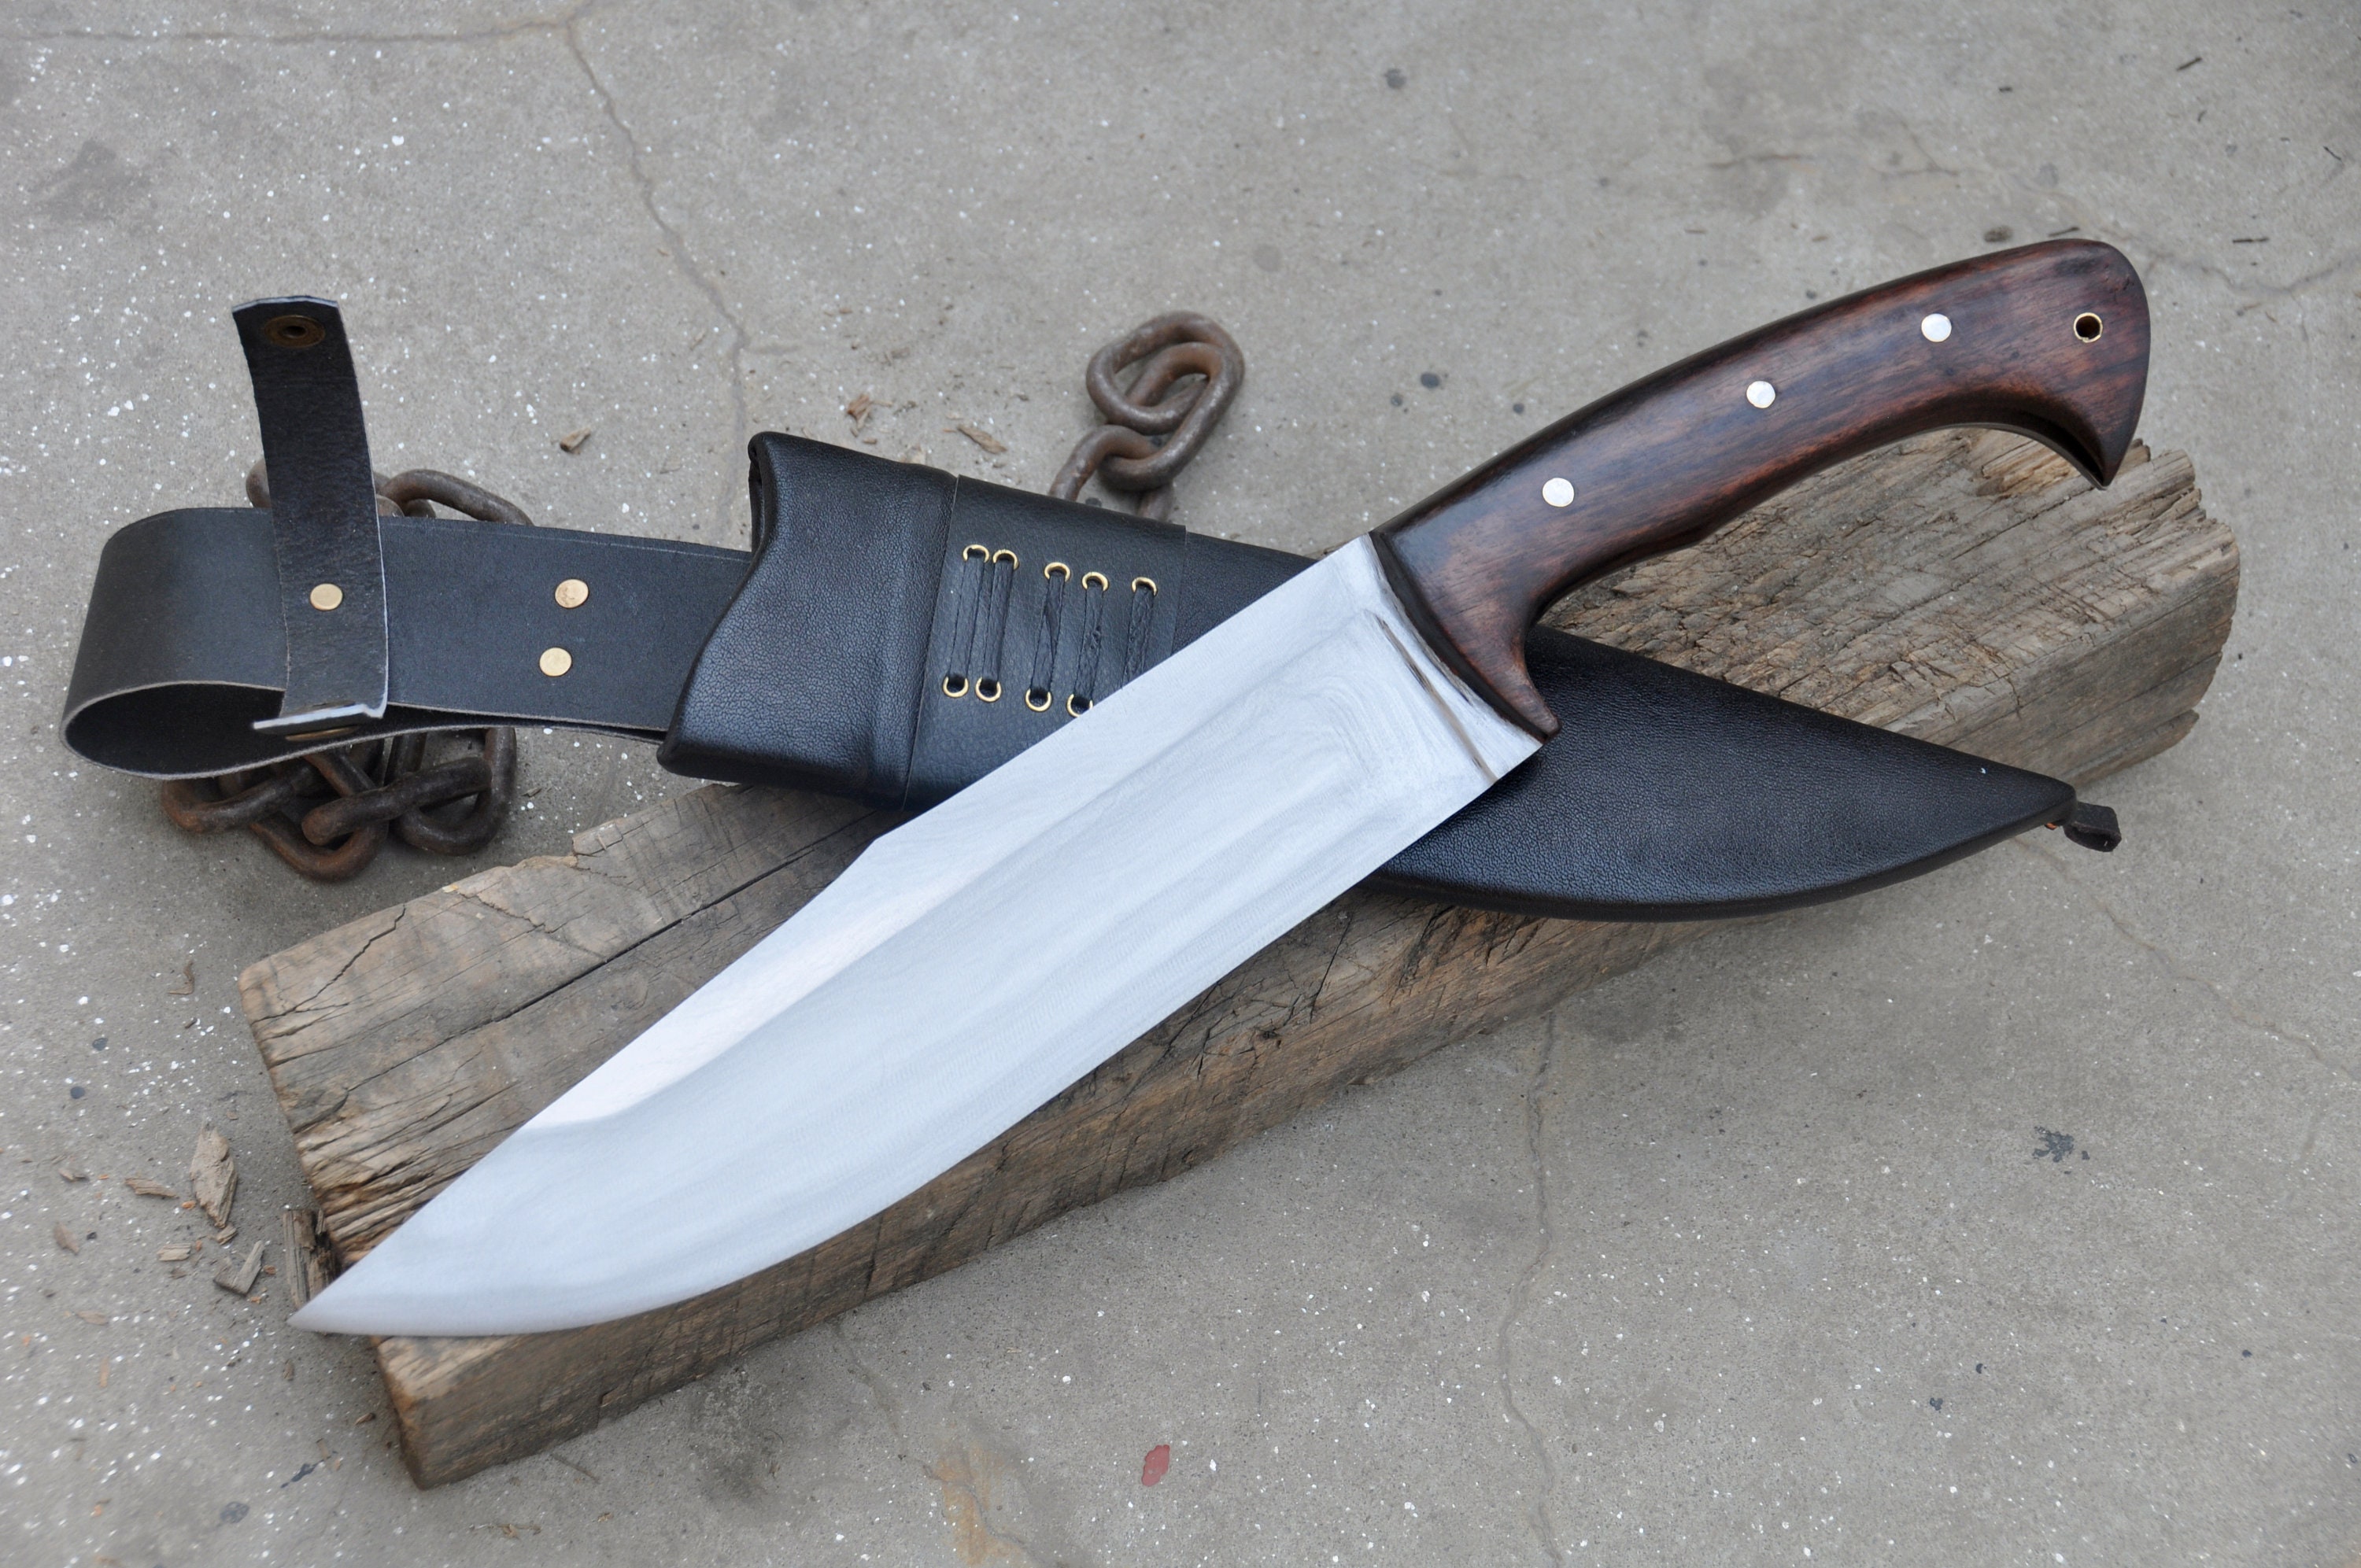 The Big Bowie Chopper Bushcraft knife (10 Inch Blade) Made in Nepal –